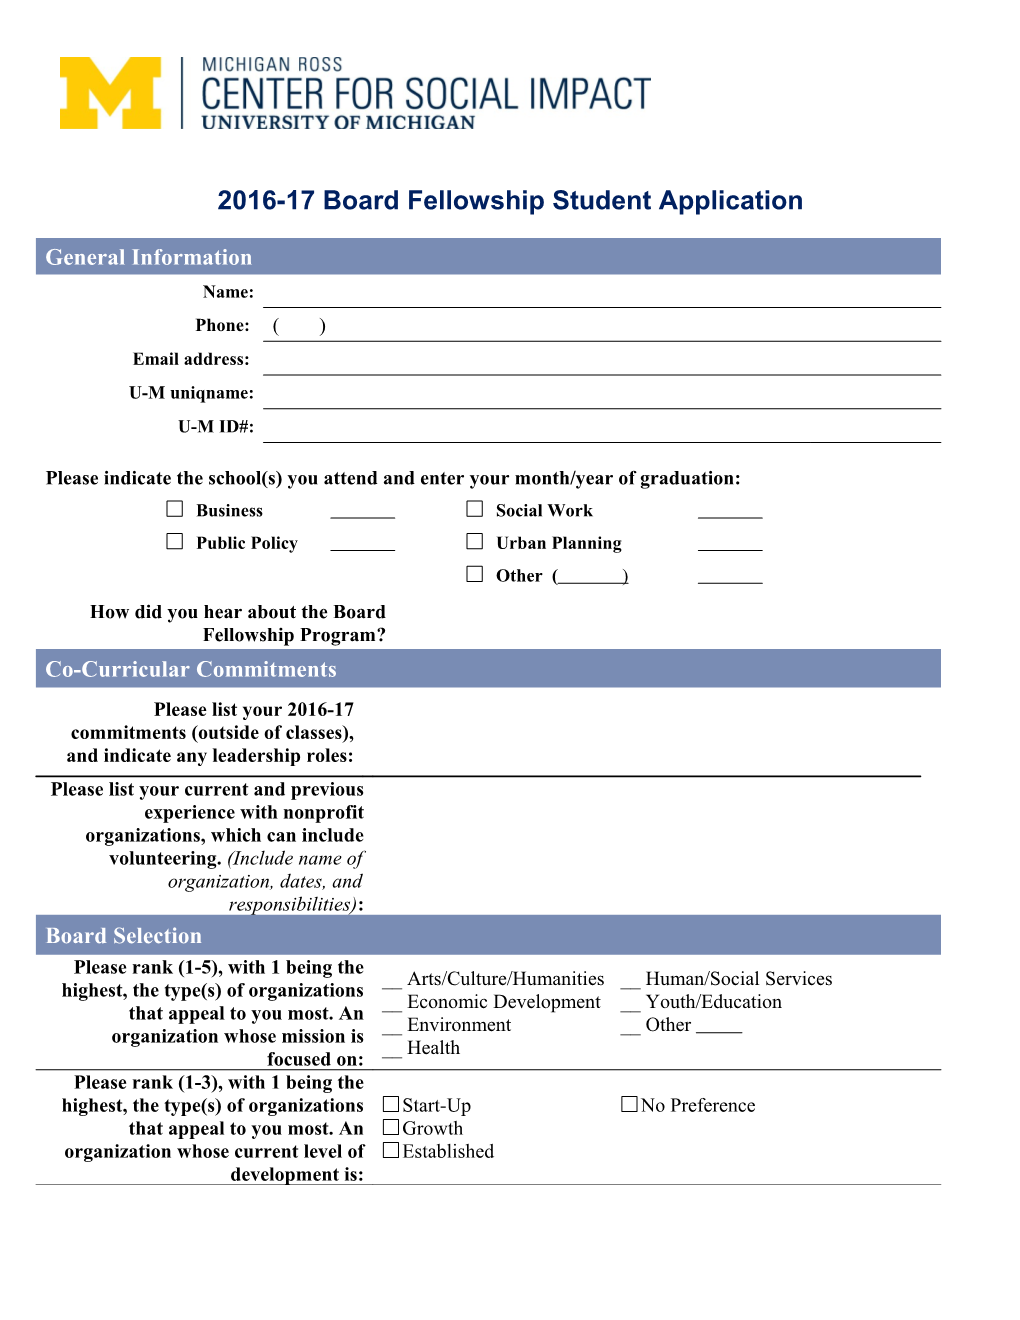 2016-17Board Fellowship Student Application